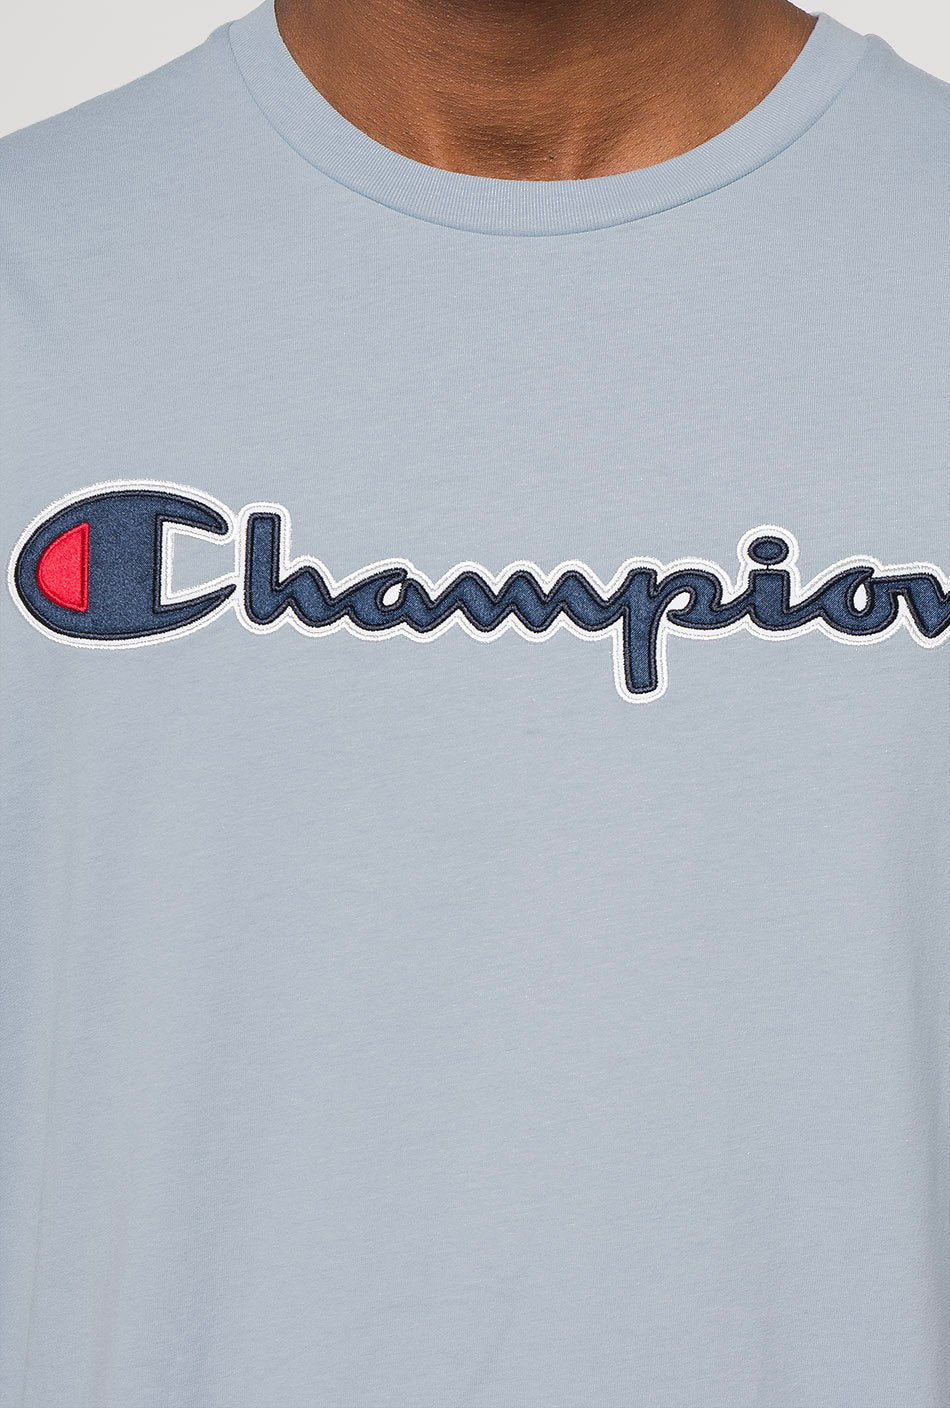 Champion Script Logo Crew Neck Blue